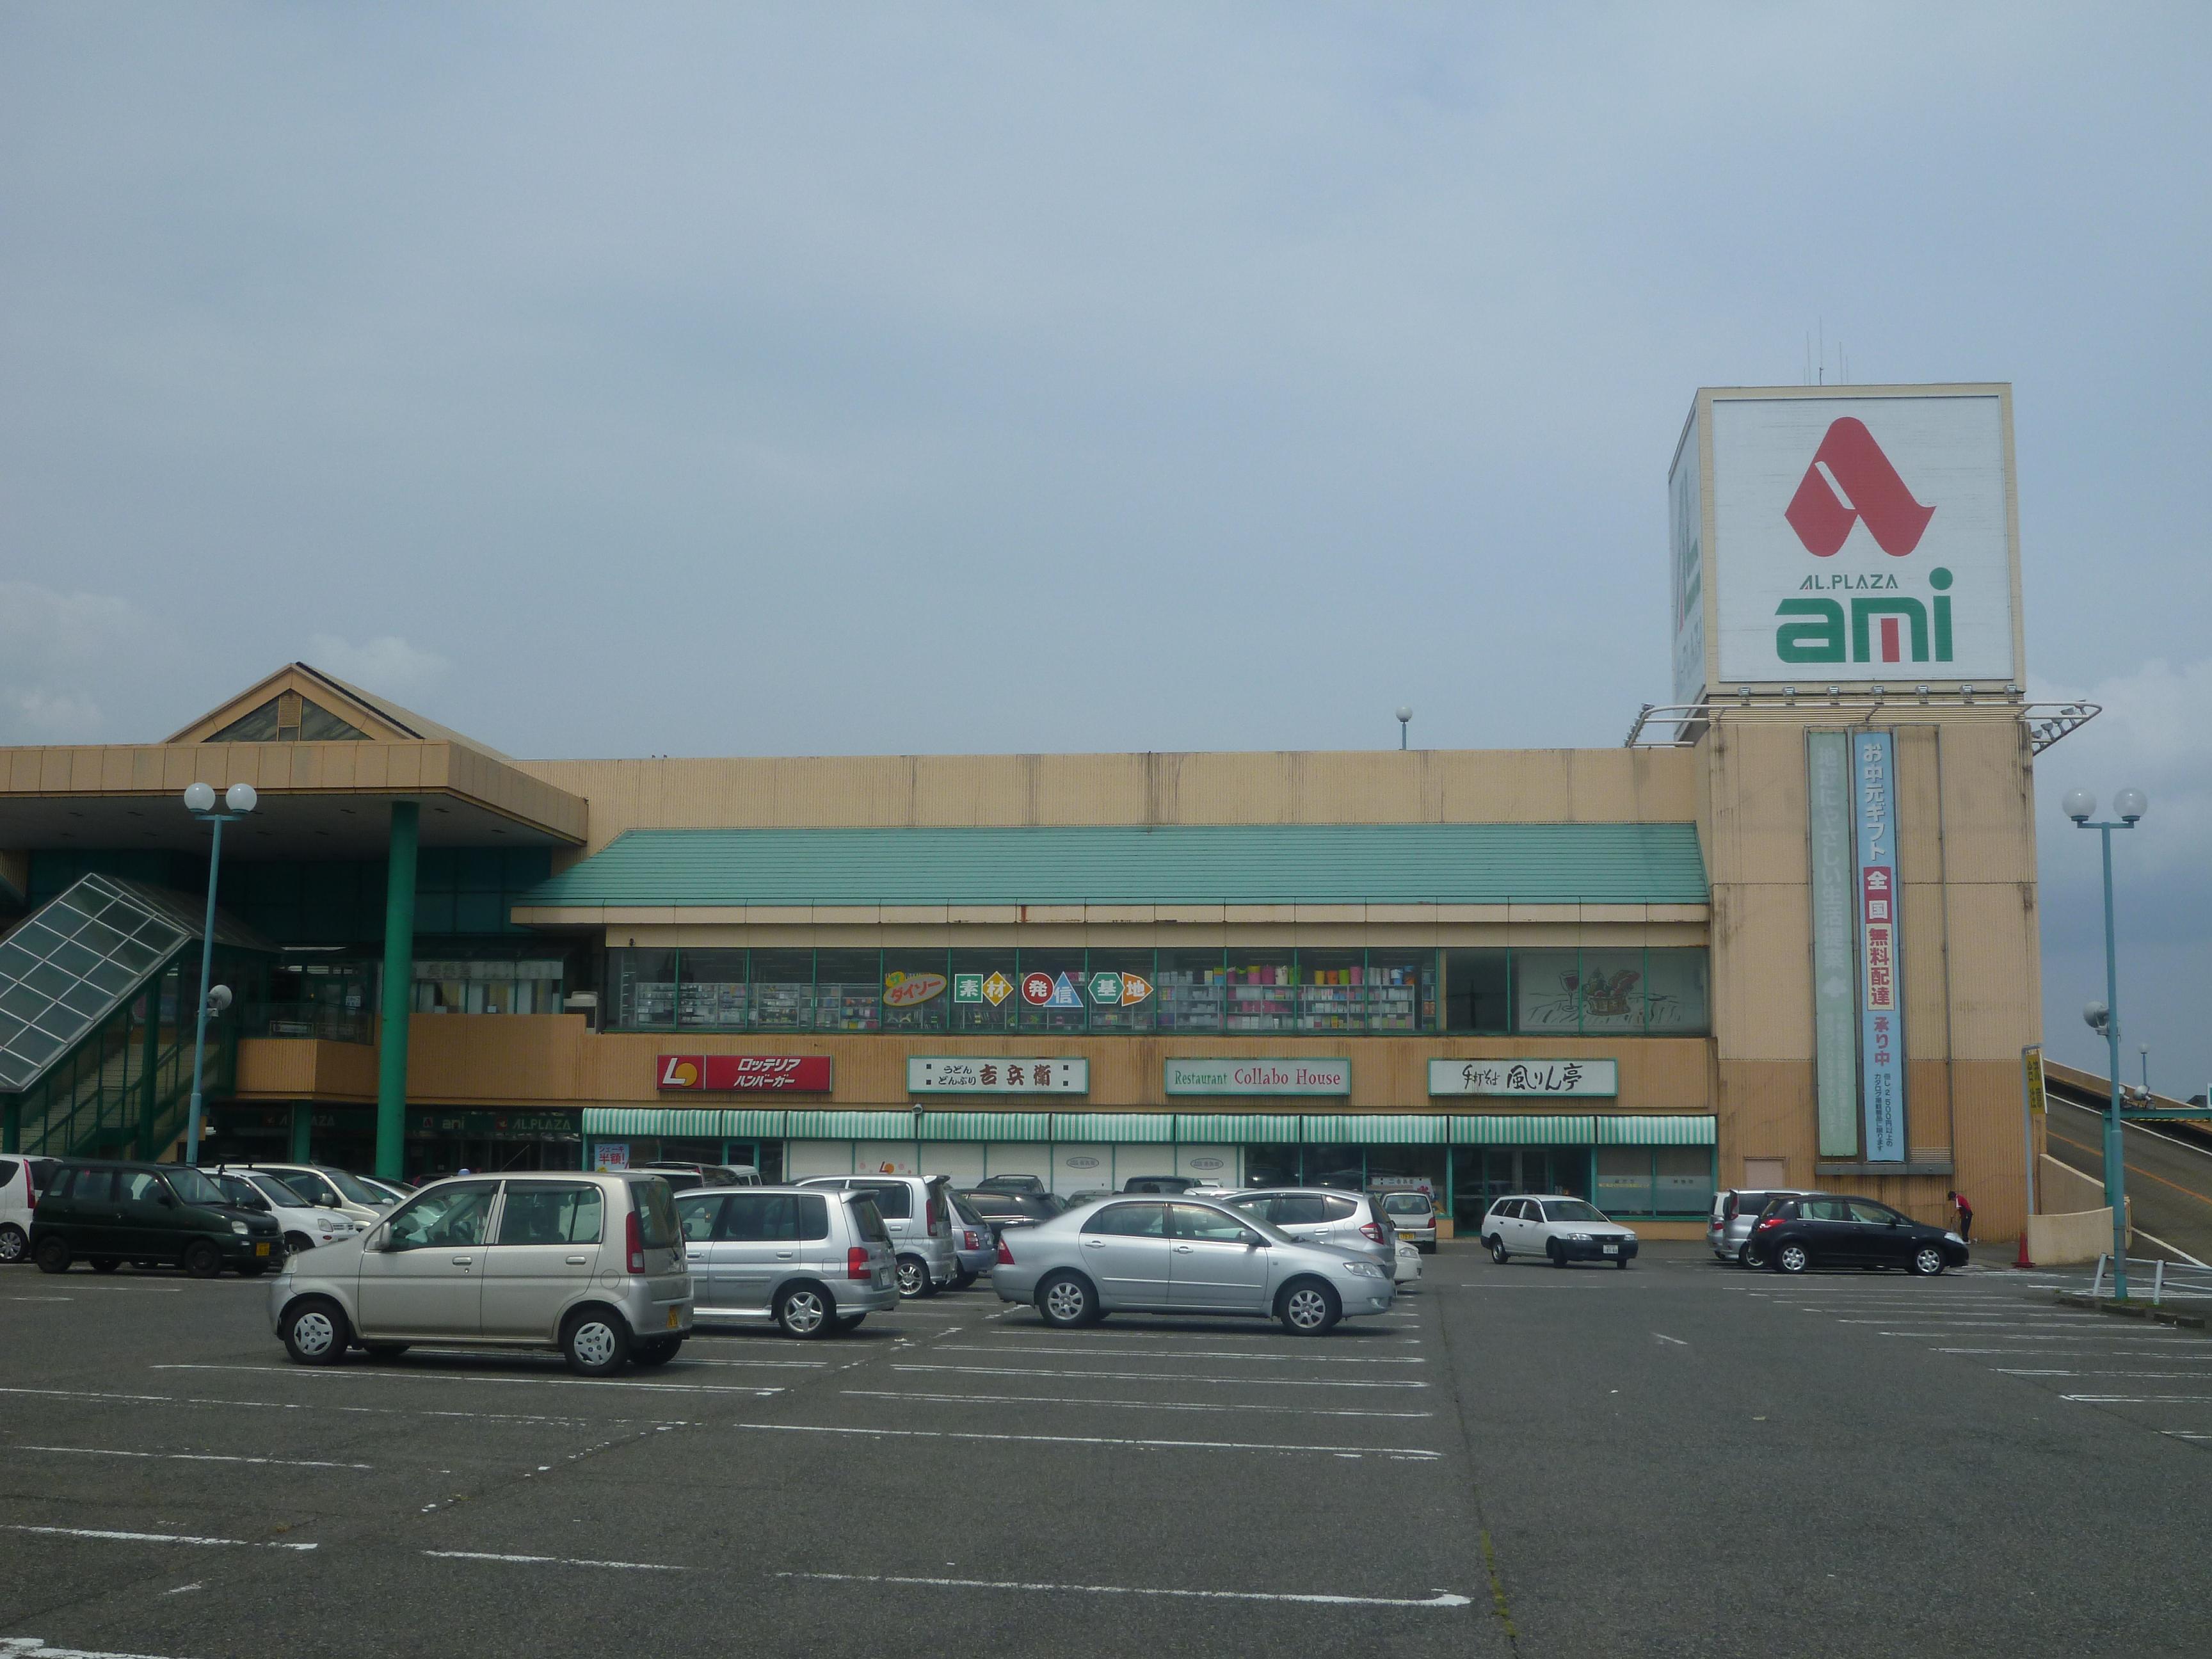 Shopping centre. Shopping Plaza 1653m to Ami (shopping center)